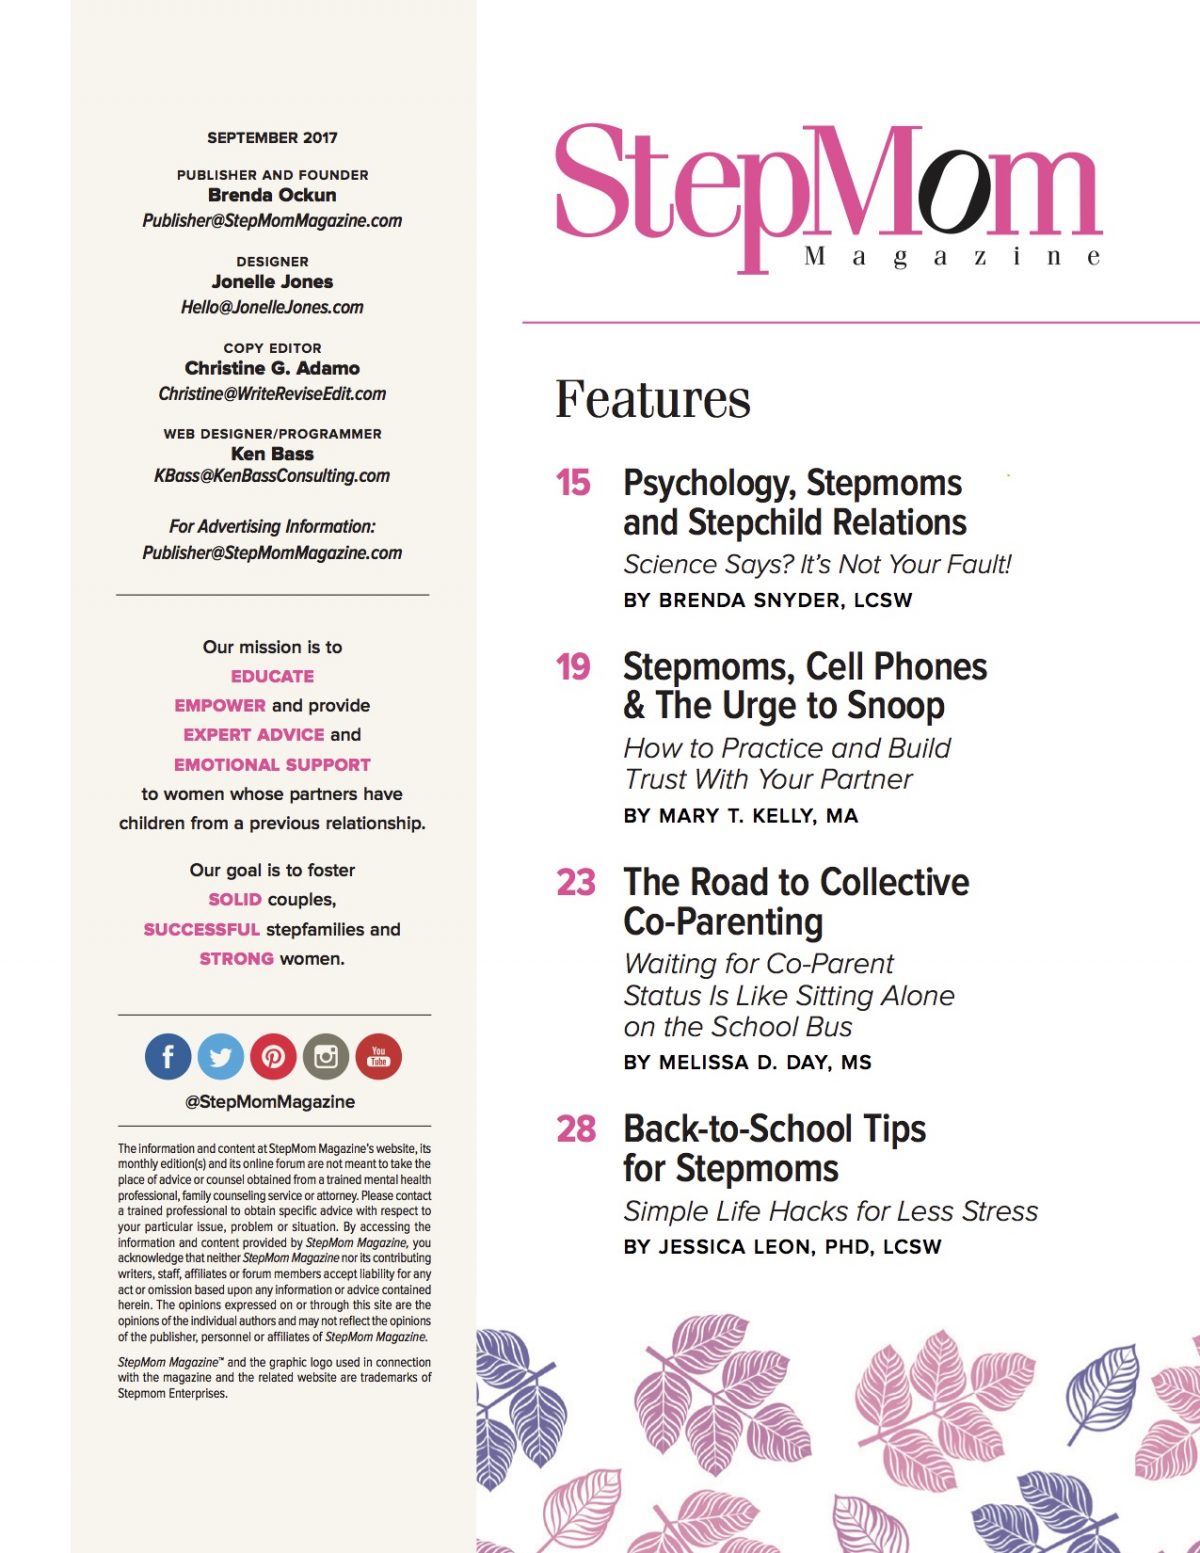 Stepmom Magazine Inside The September 2017 Issue 4257